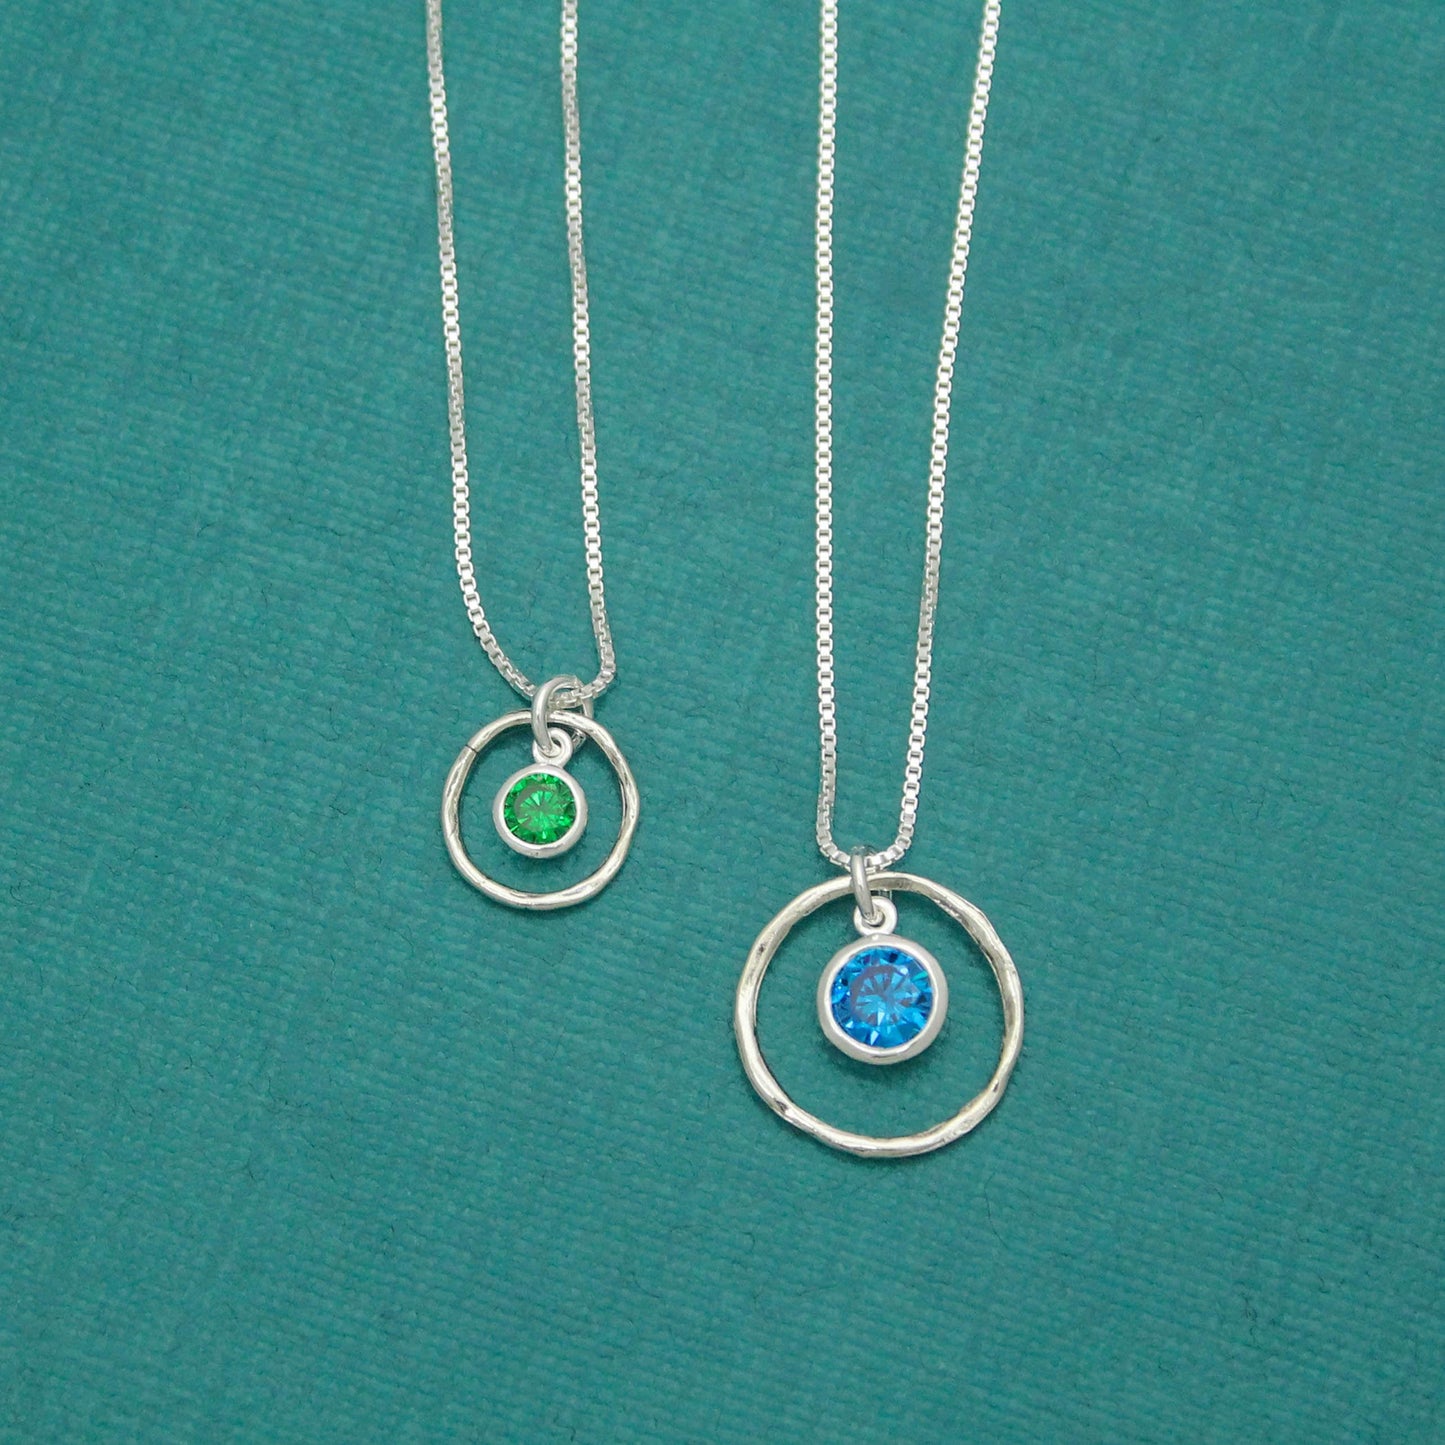 March Birthstone Necklace, Aquamarine Jewelry, March Birthday Gift, March Birthstone Jewelry, March Aquamarine Necklace, Sterling Silver